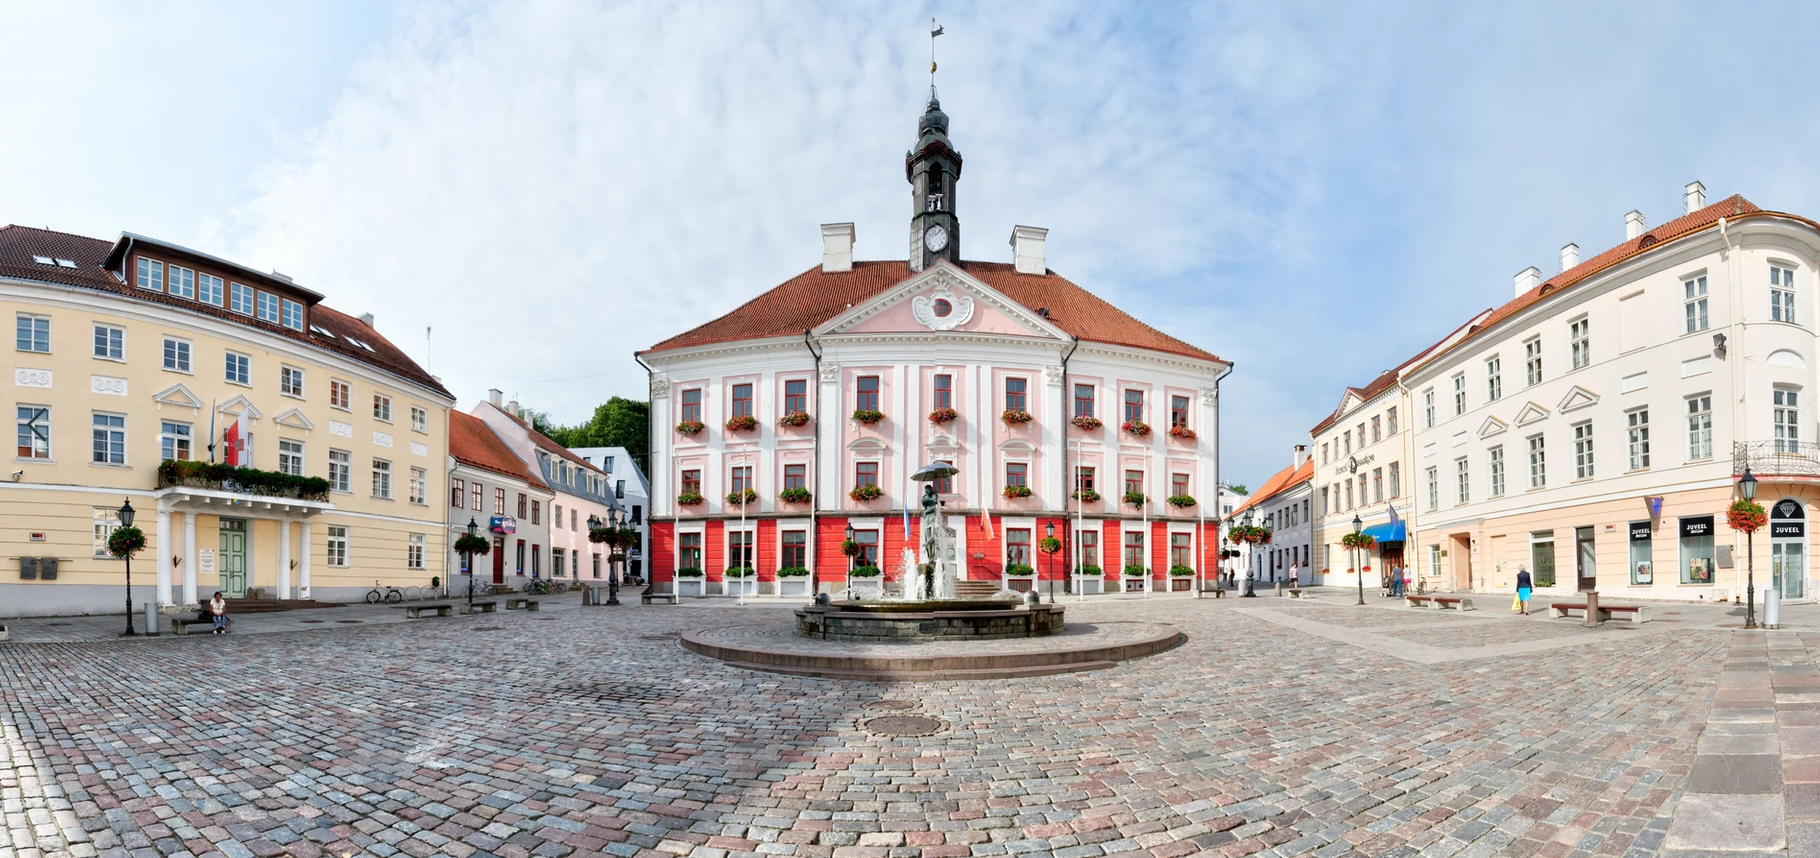 Tartu, Estónia. Fotos de Julius Jansson, Jacques Bopp e José Luís Peixoto